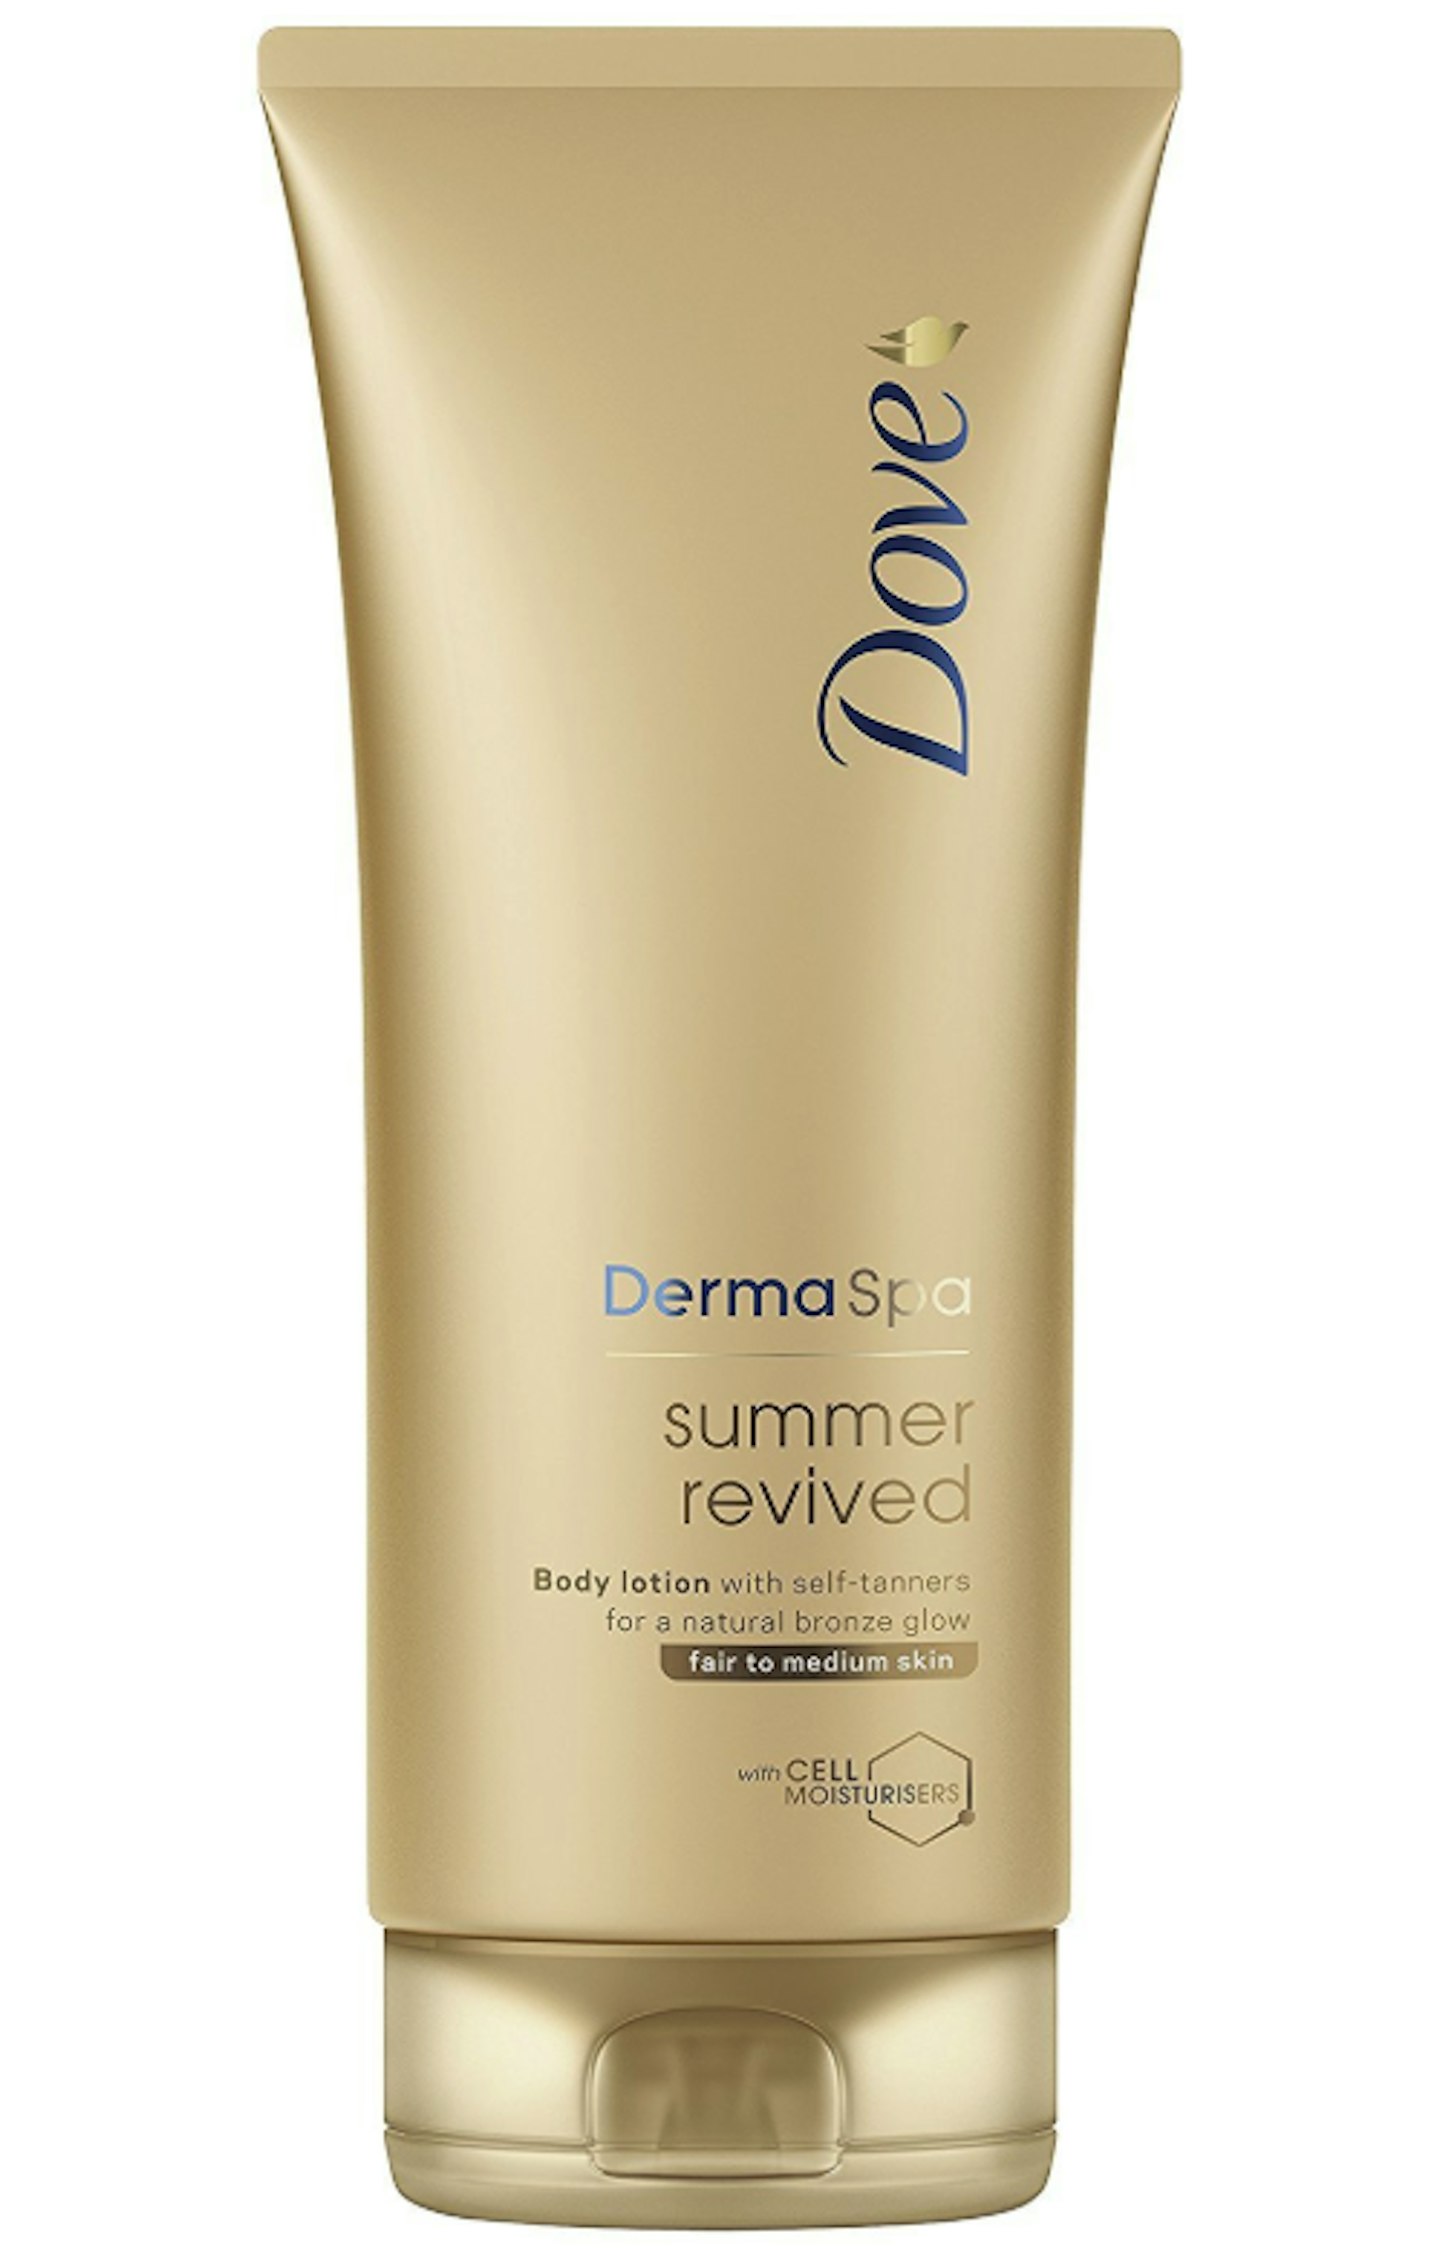 Dove Derma Spa Summer Revived Fair to Medium Skin Body Lotion, 200ml, Amazon